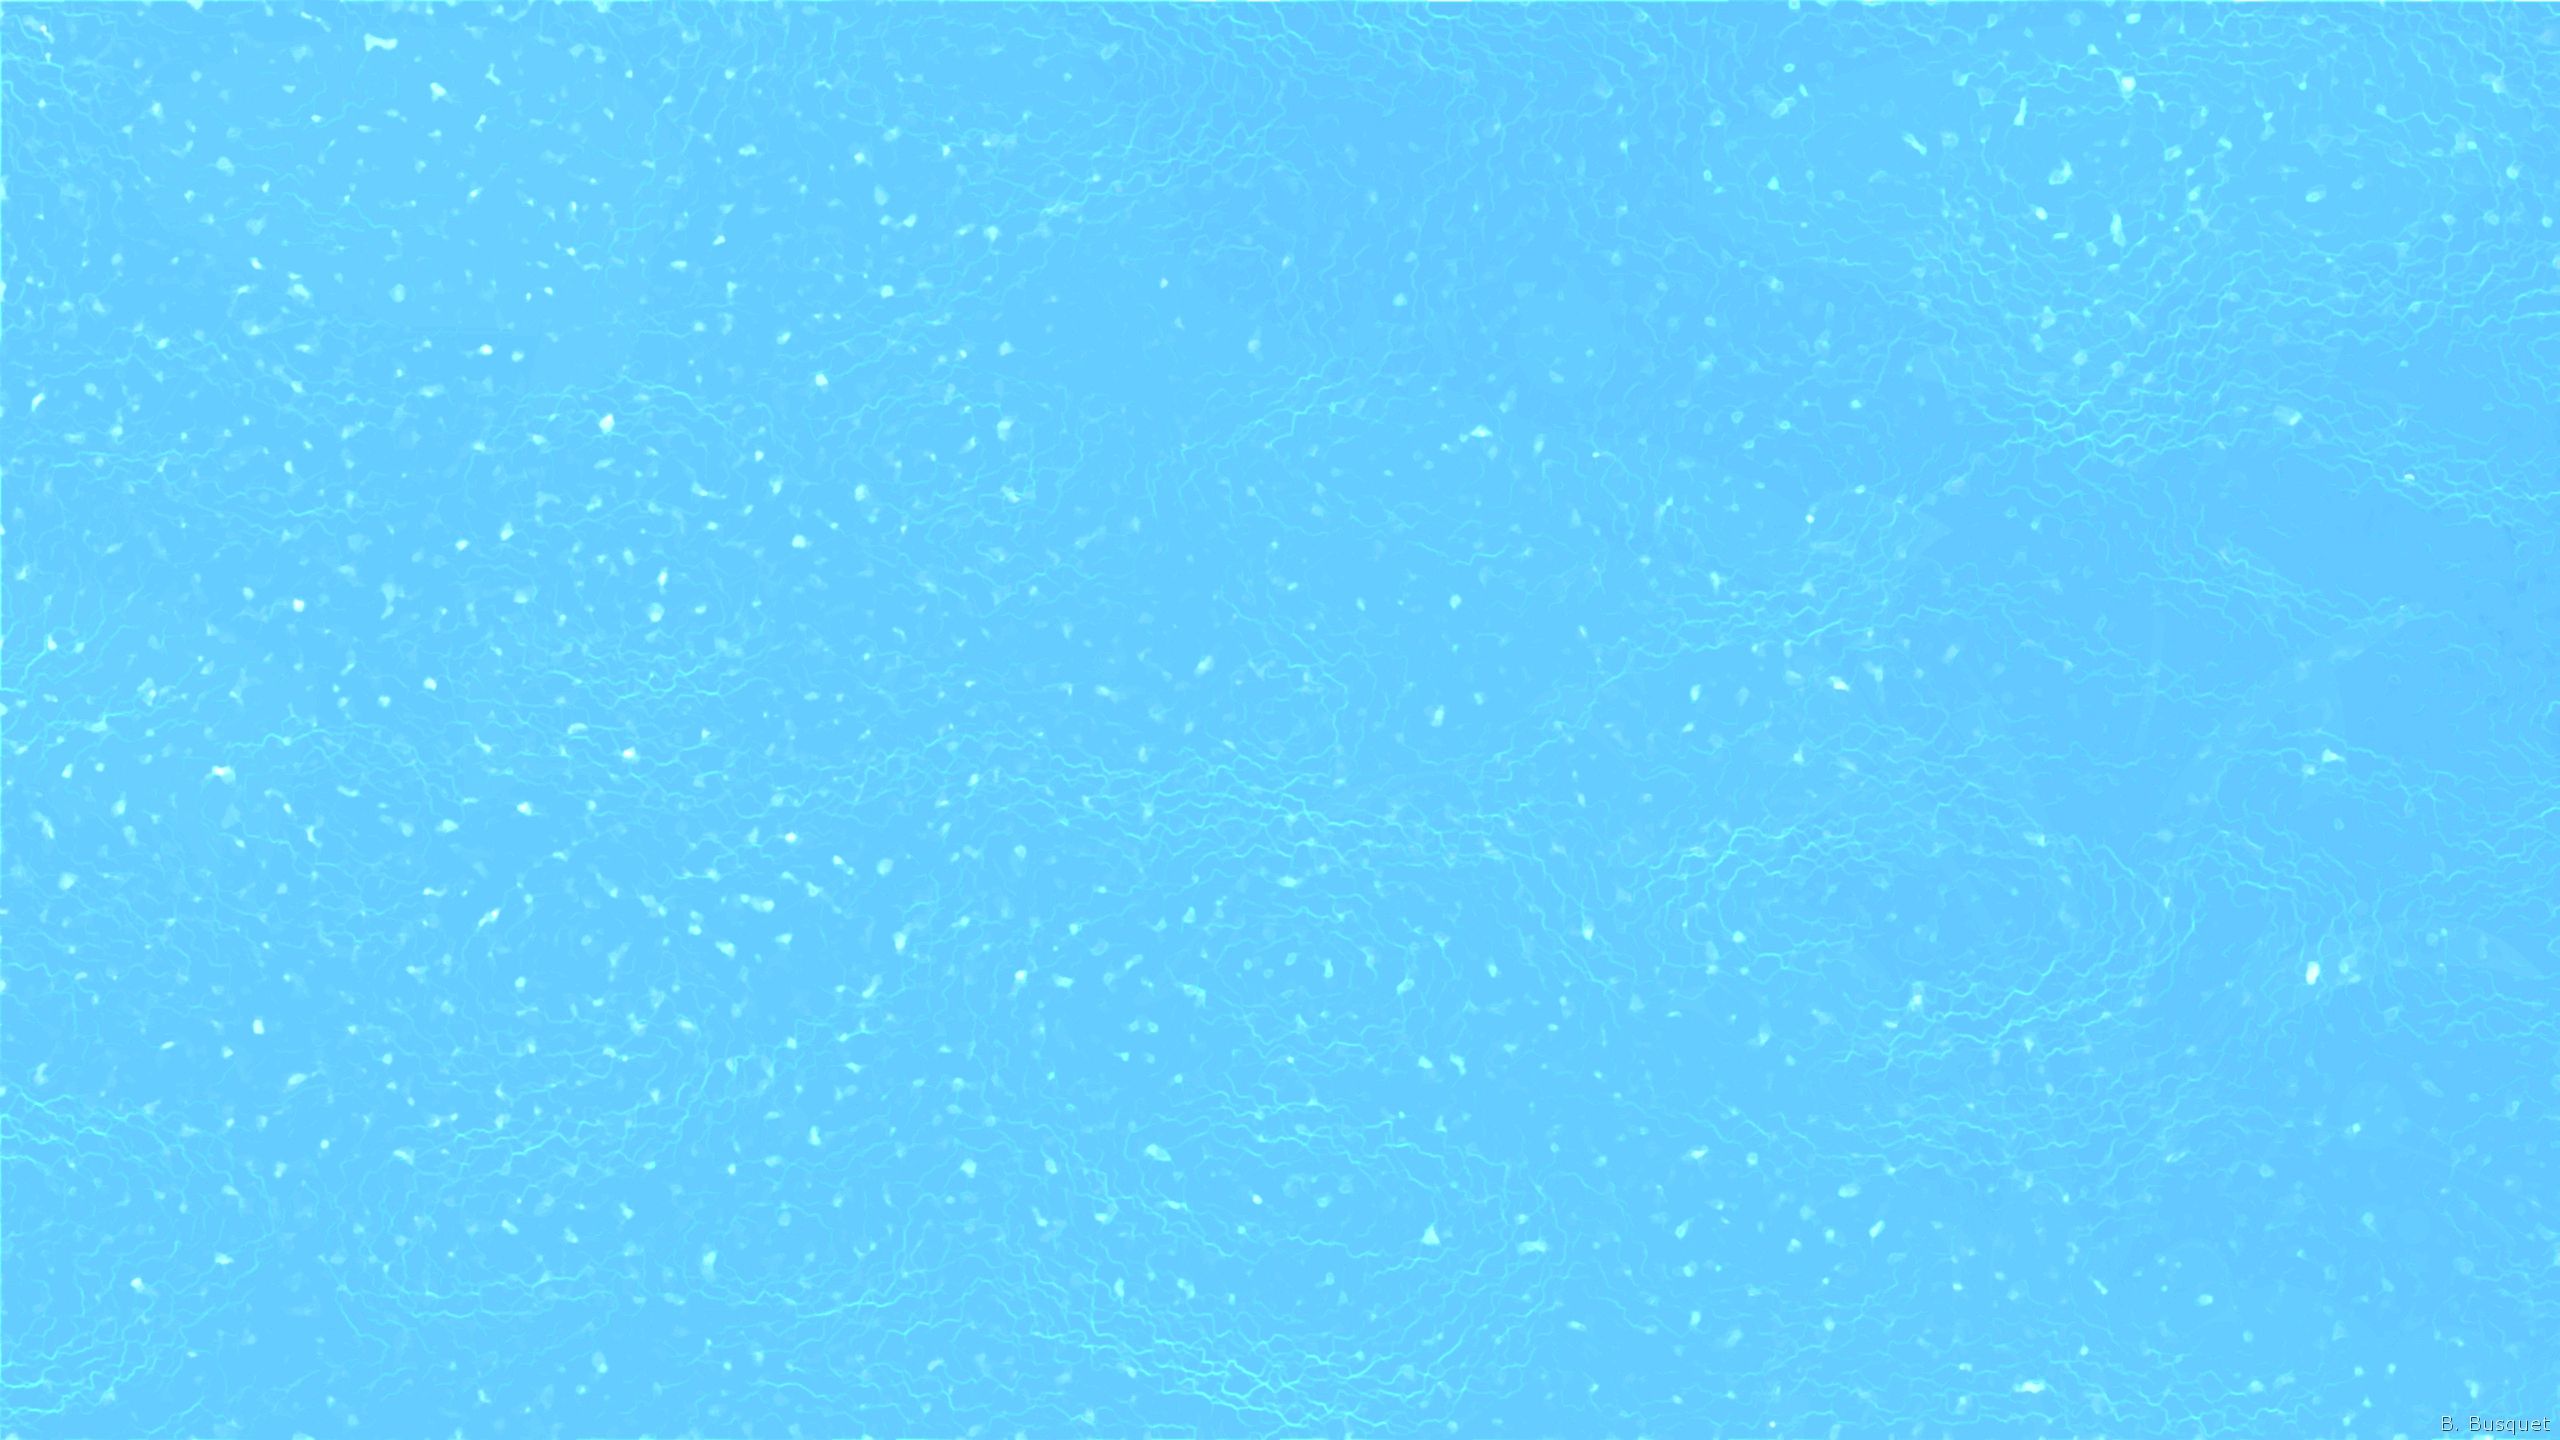 Fondos de pantalla azul claro 4K (2560x1440 px) | WallpapersExpert.com